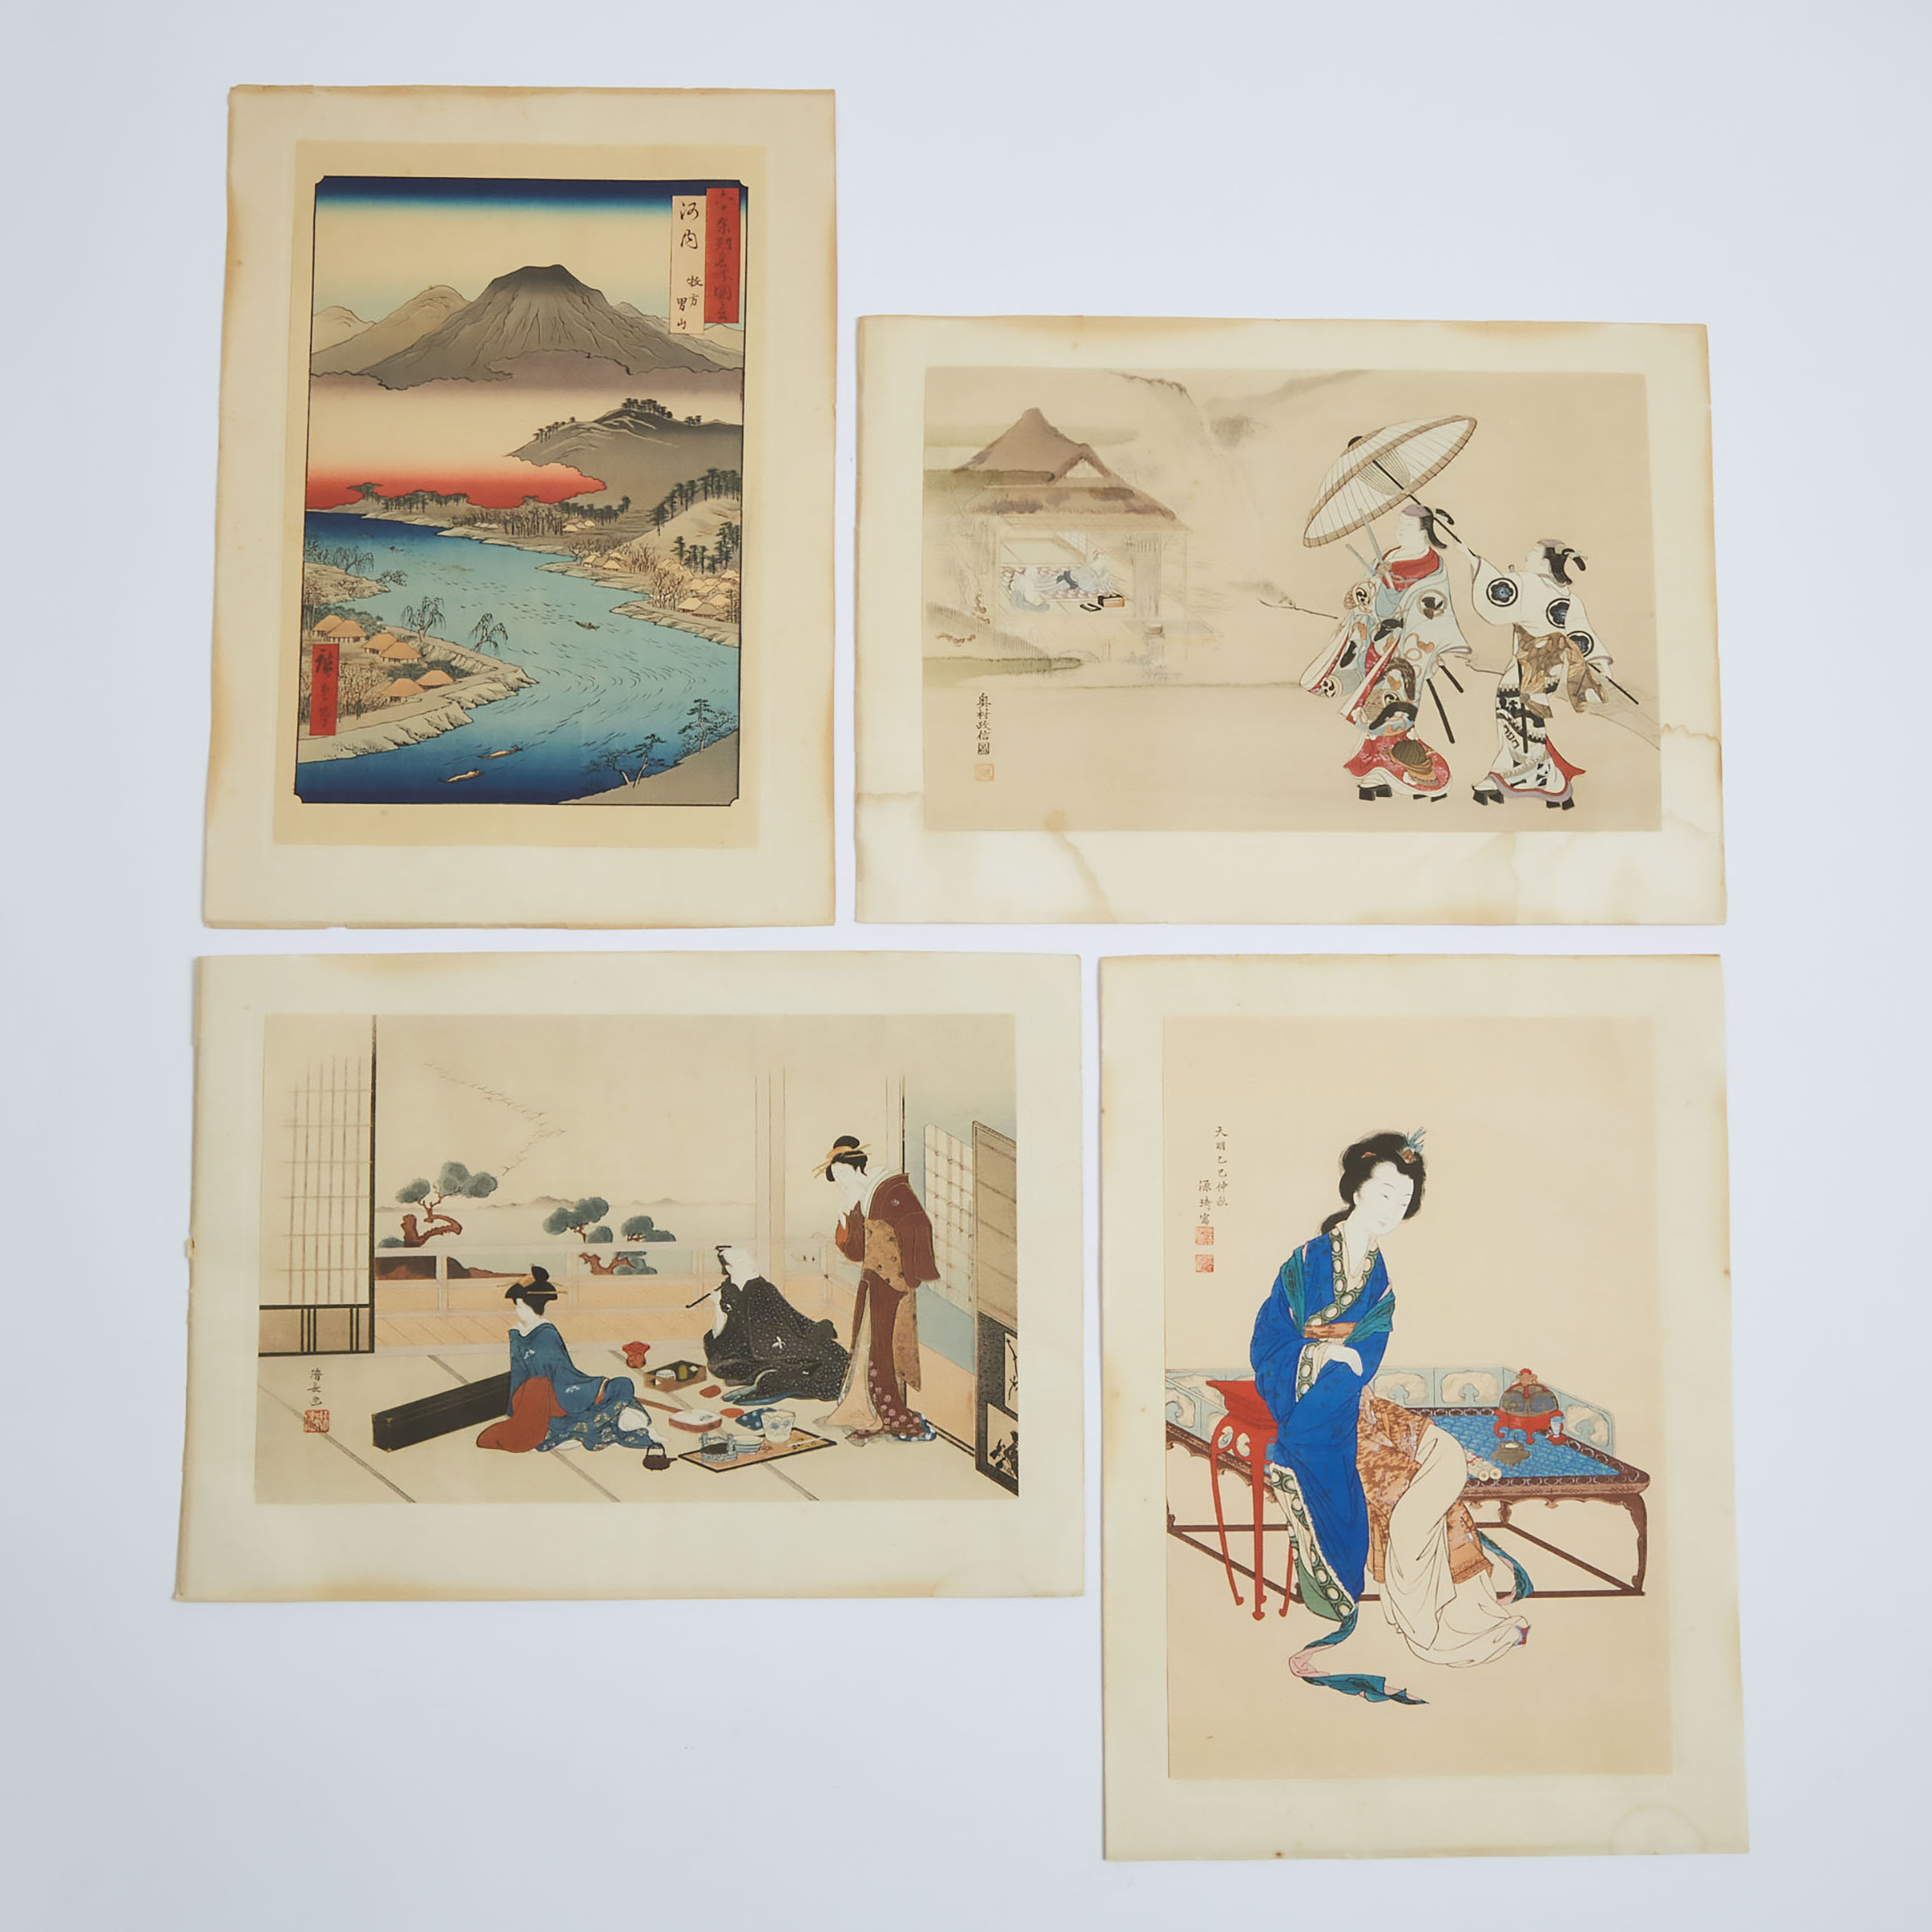 After Okumura Masanobu (1686-1764), Komai Genki (1747-1797), Torii Kiyonaga (1752-1815), and Utagawa Hiroshige (1797-1858), Four Japanese Woodblock Prints, Early 20th Century